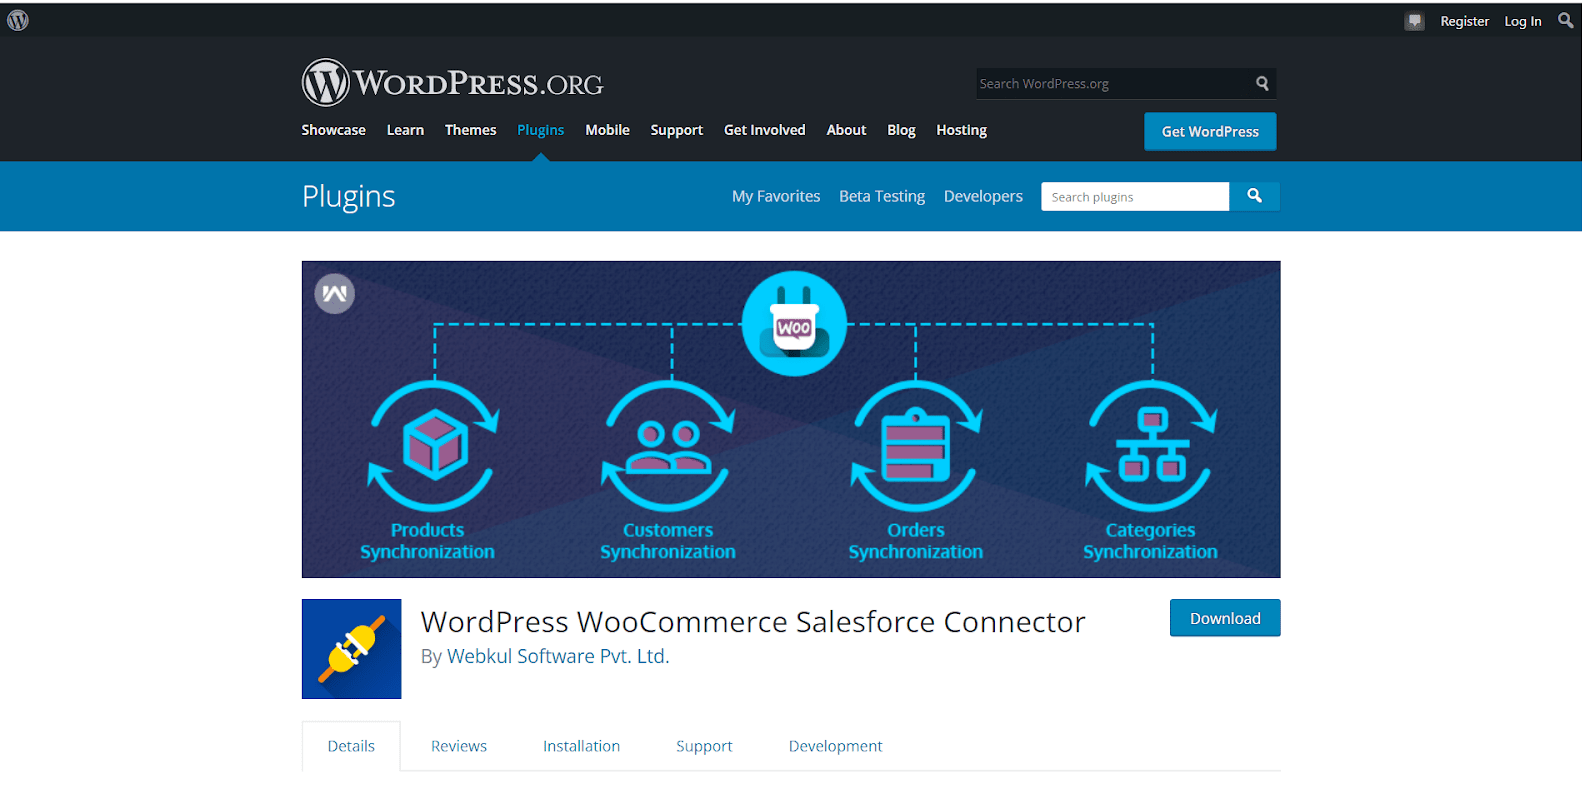 Salesforce connector for WordPress WooCommerce